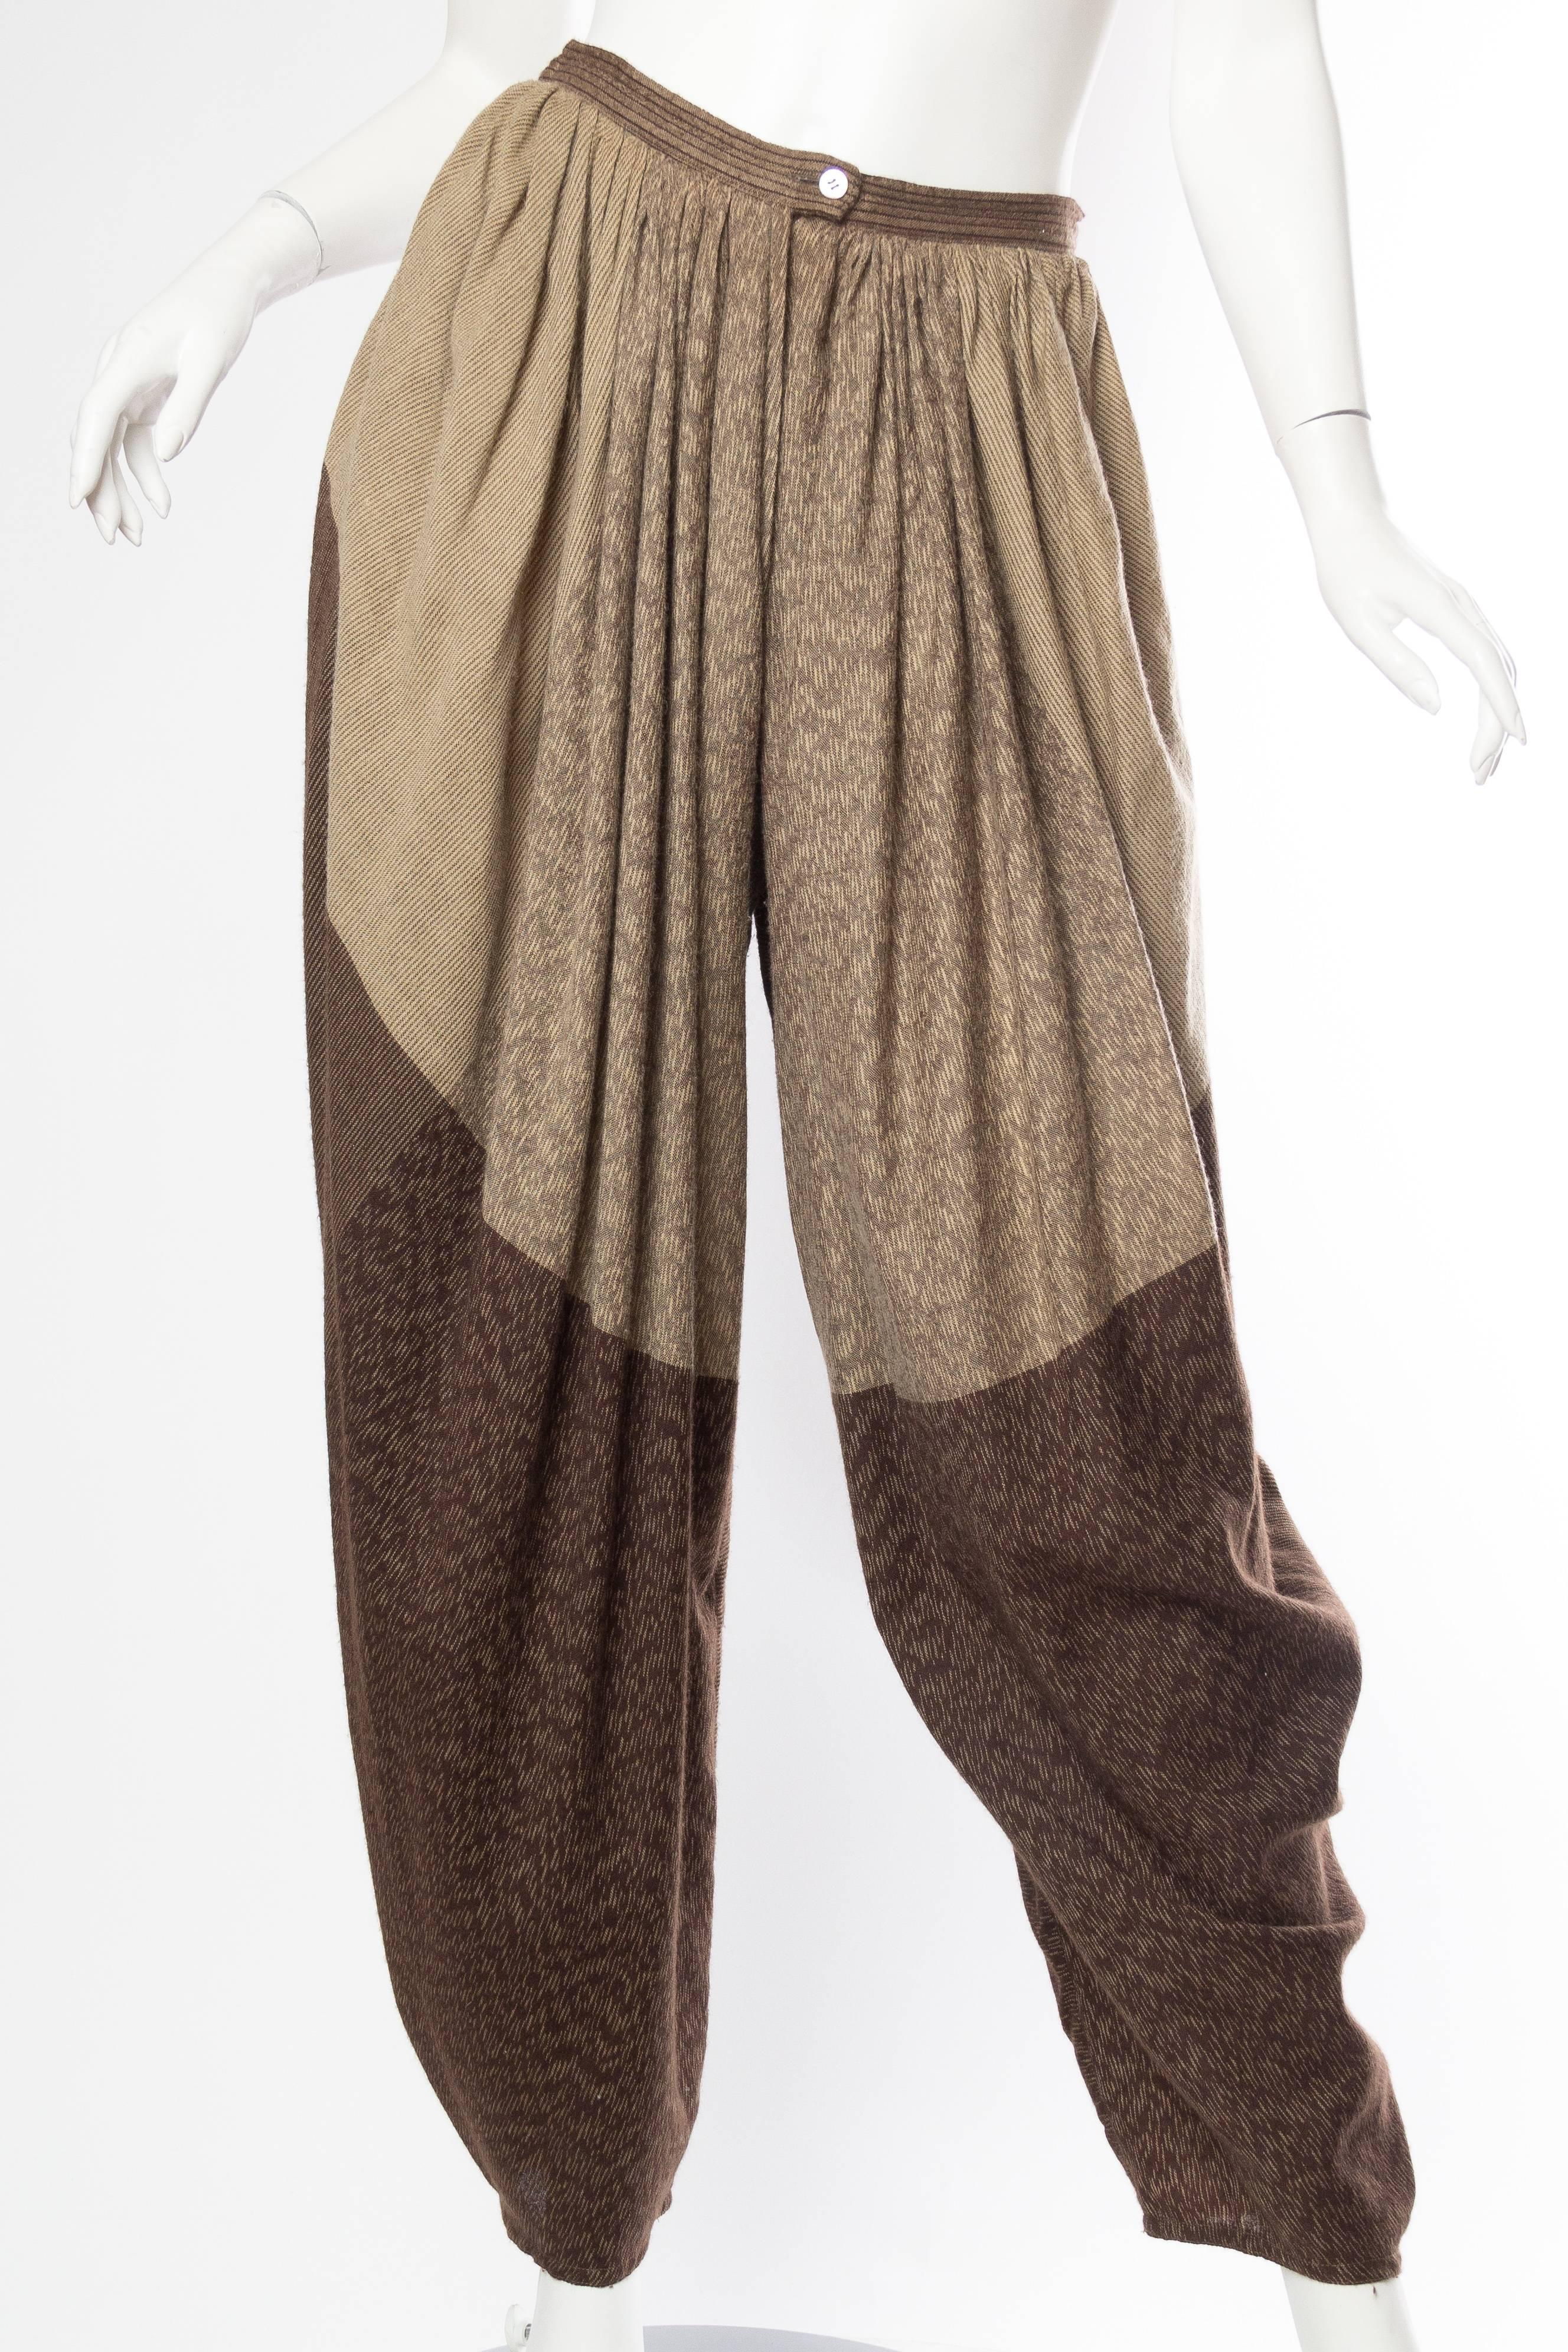 1980S ISSEY MIYAKE Tan & Brown Wool Blend Oversized Shirt Pleated Pants Ensemble